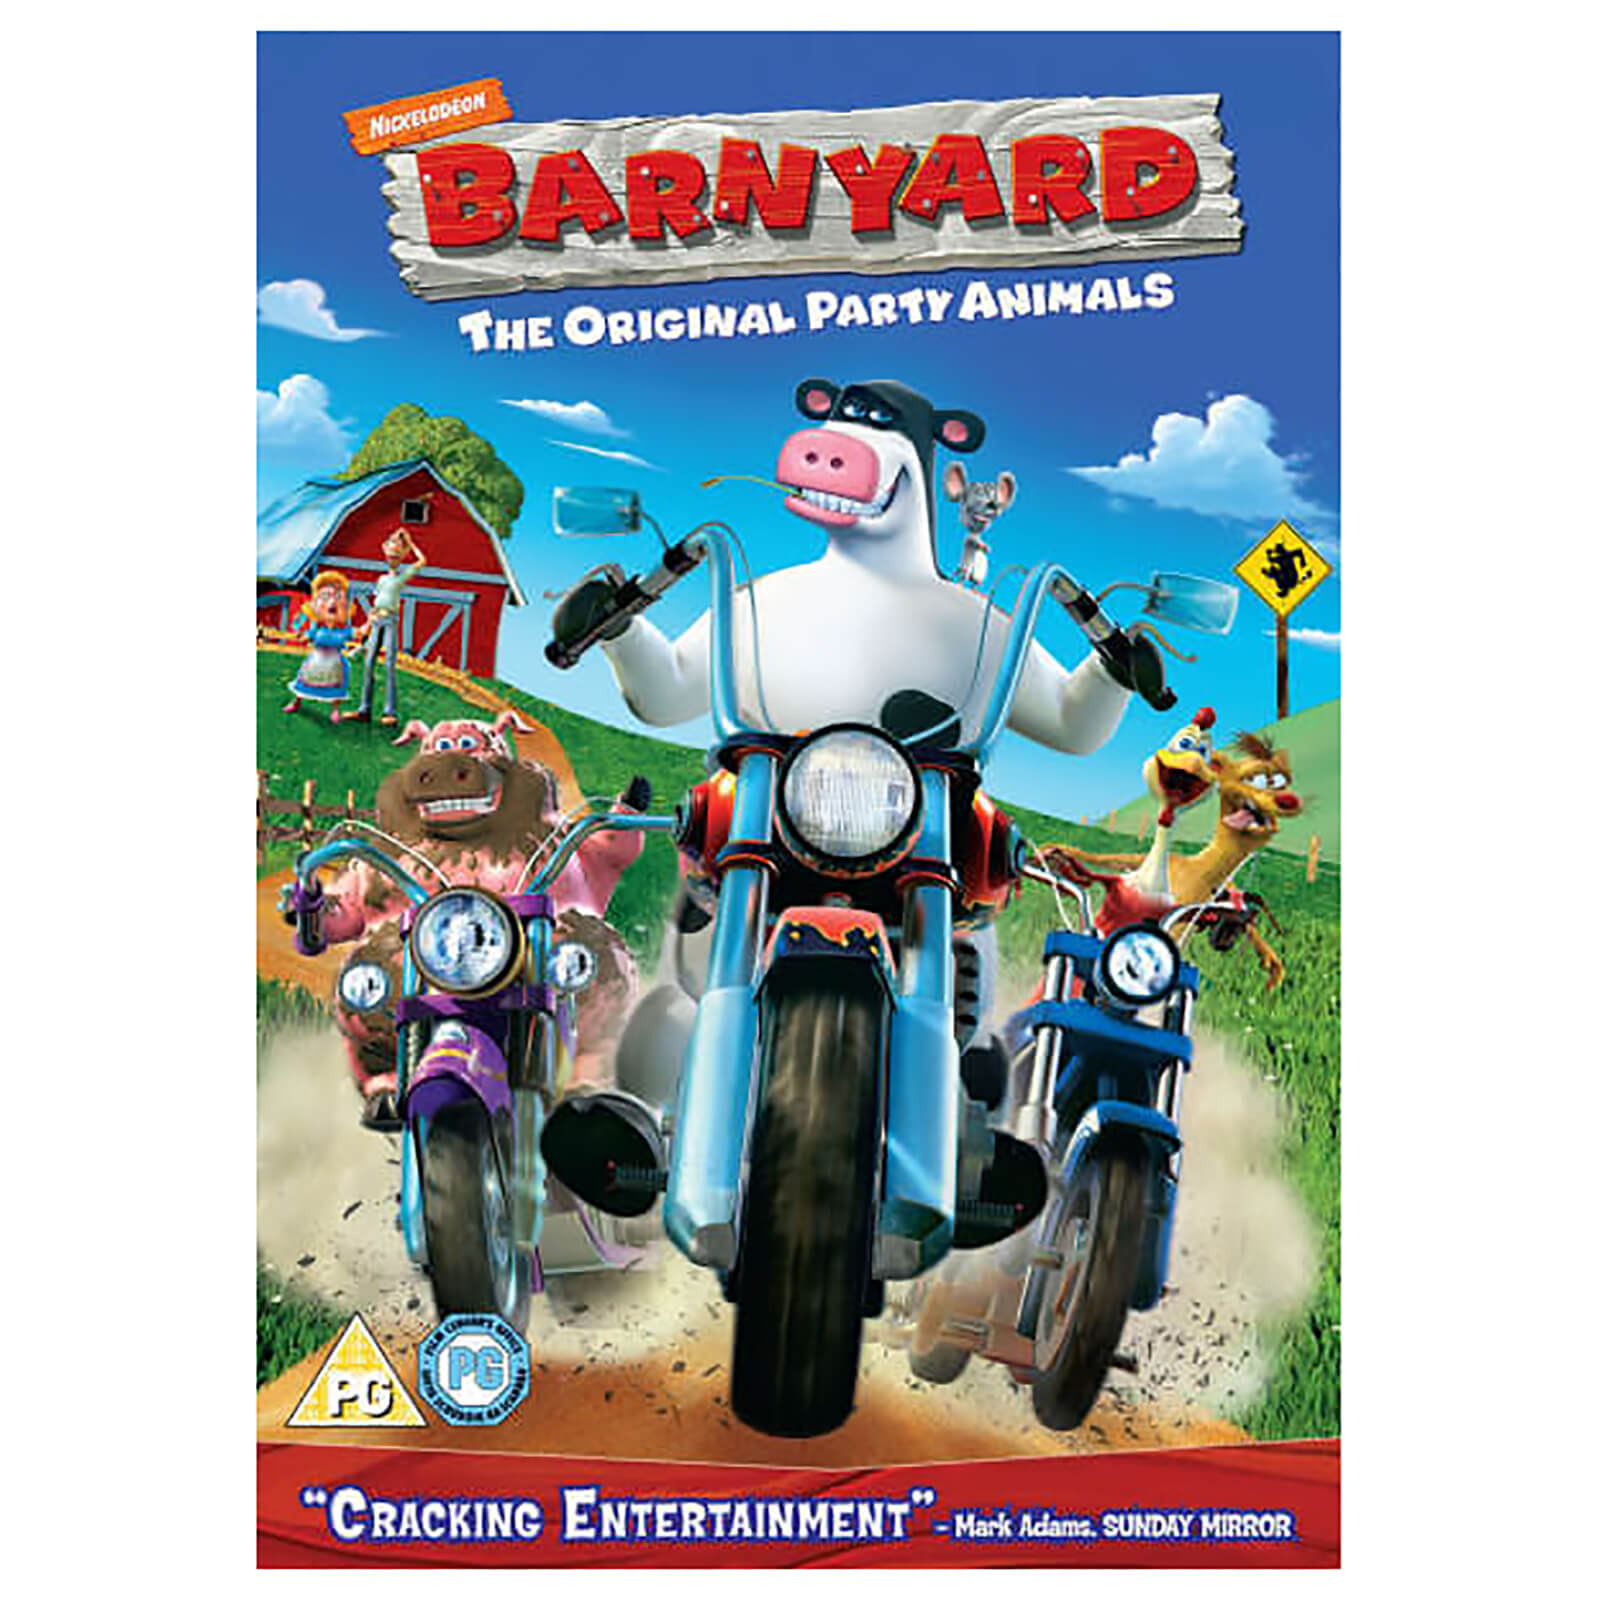 Barnyard von Paramount Home Entertainment